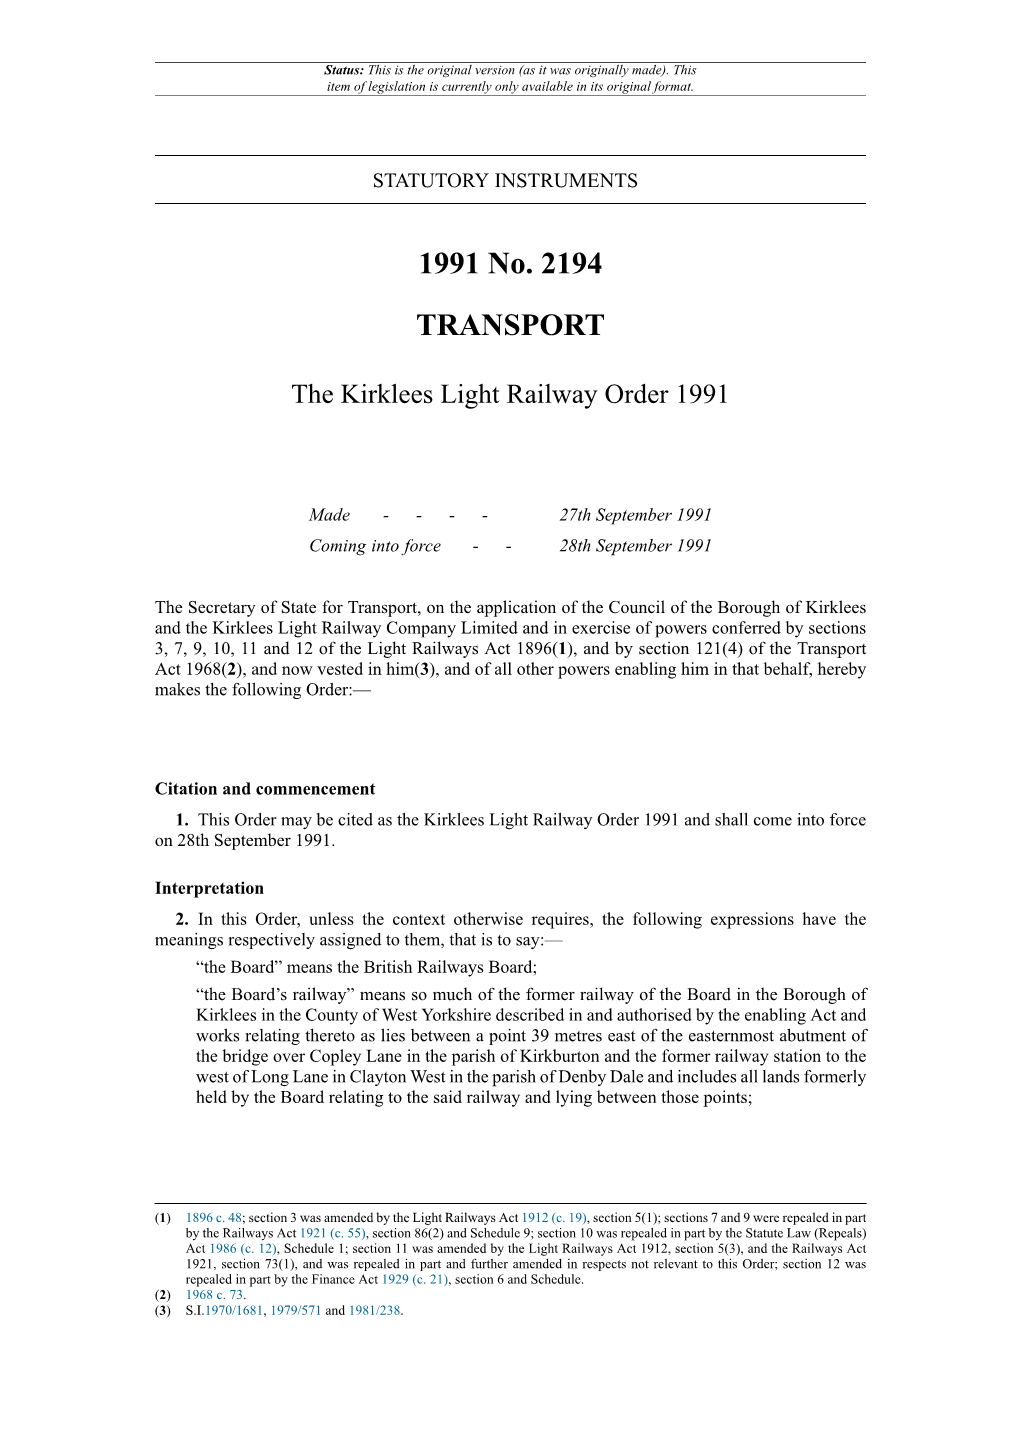 The Kirklees Light Railway Order 1991